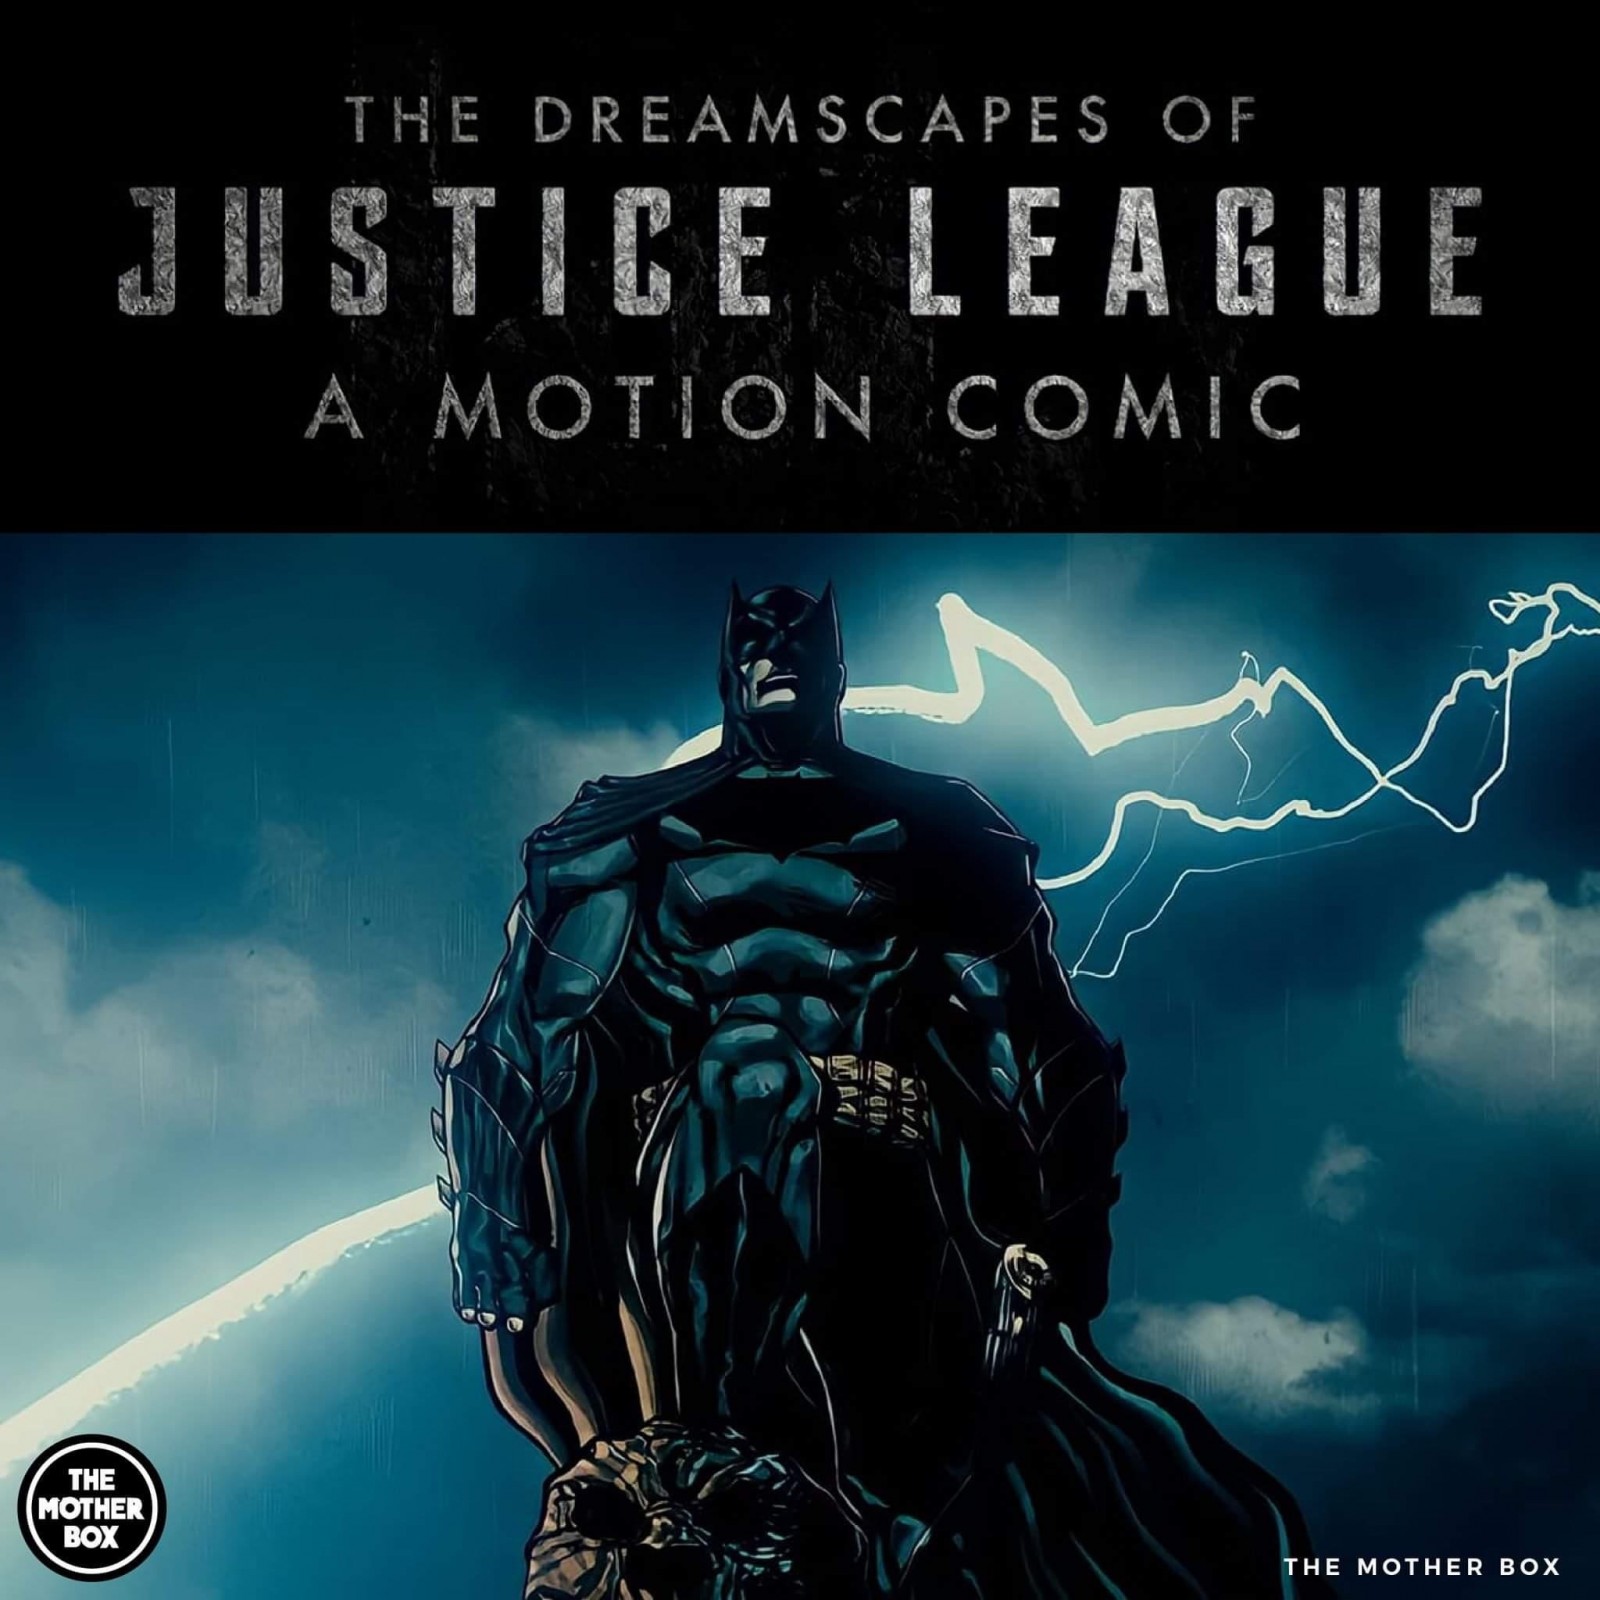 Batman, Snyderverse, The Dreamscapes of Justice League: A Motion Comic